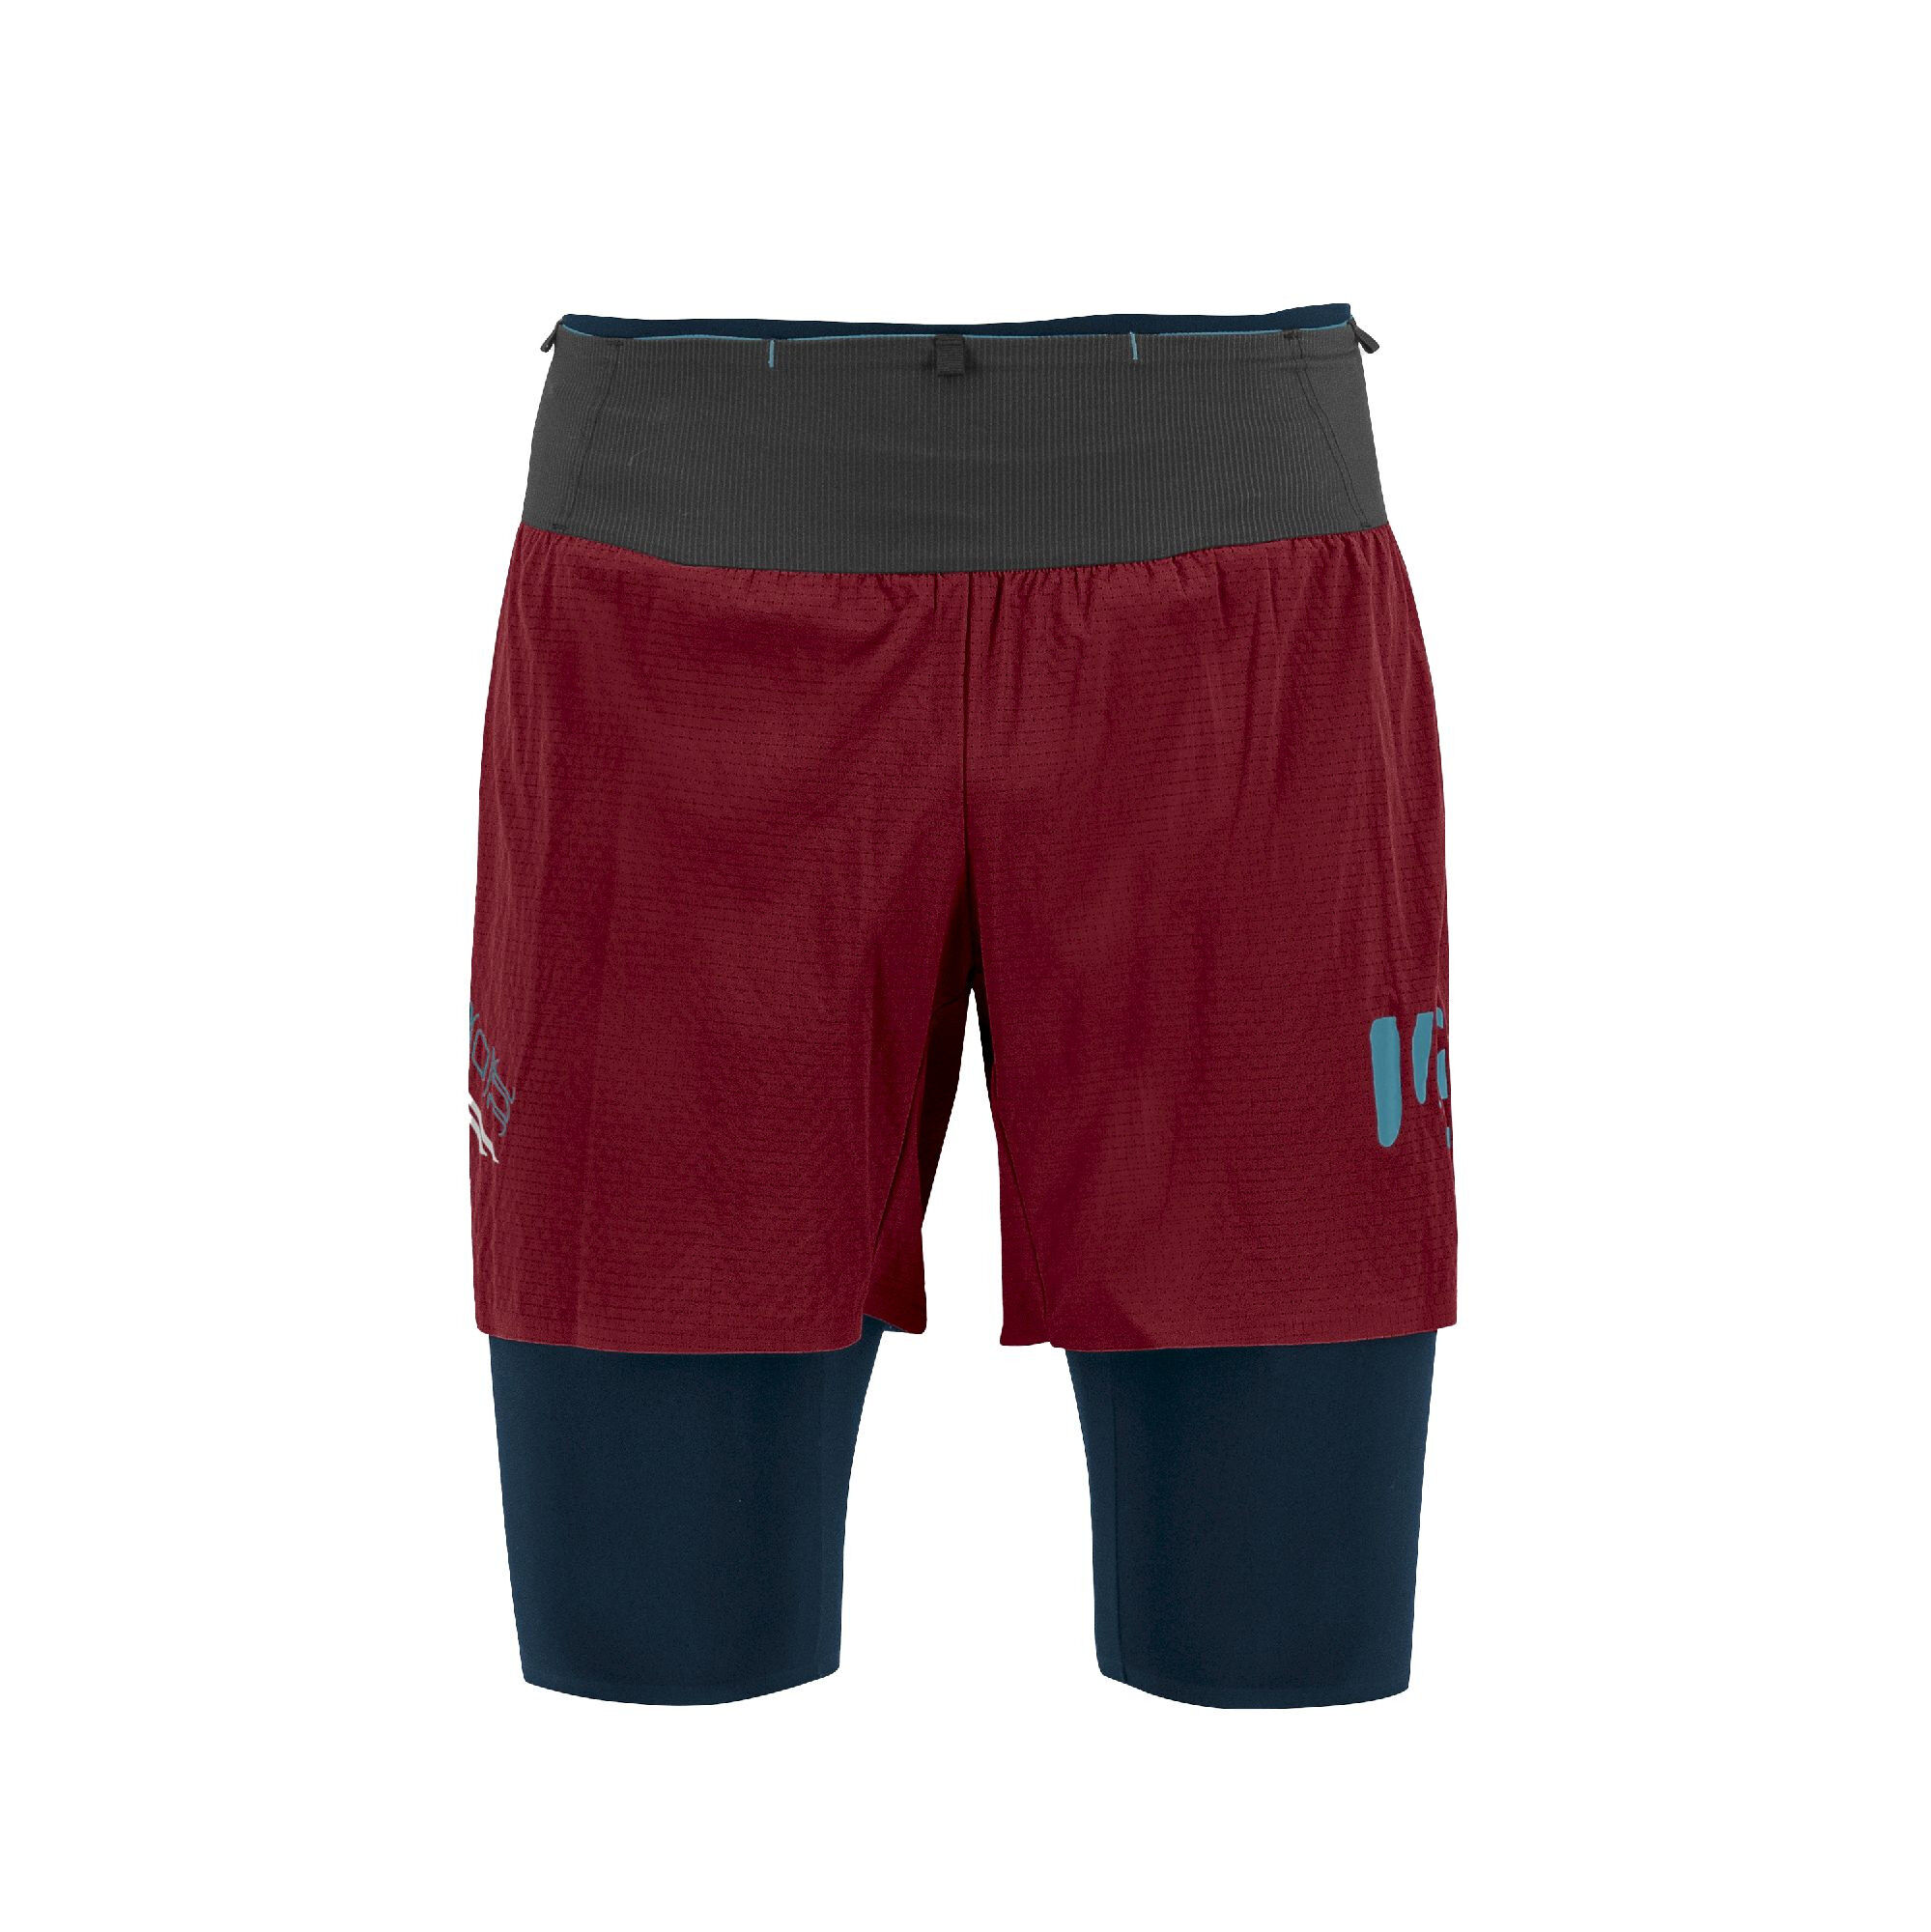 Karpos Cengia Short - Running shorts - Men's